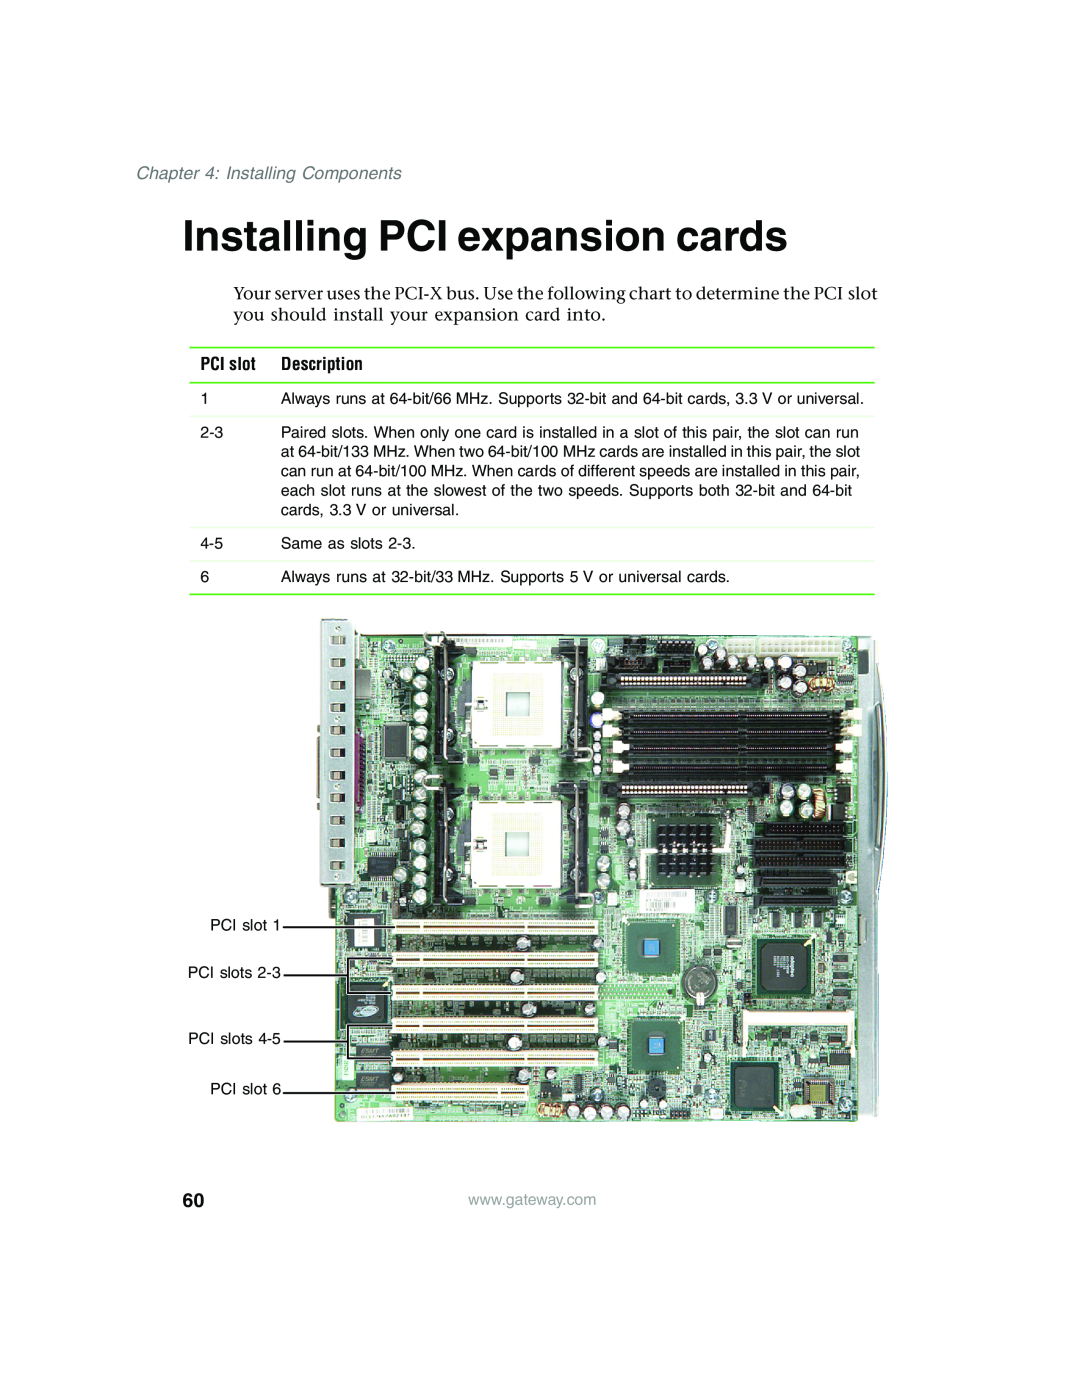 Gateway 960 manual Installing PCI expansion cards, PCI slot, Installing Components, Description 